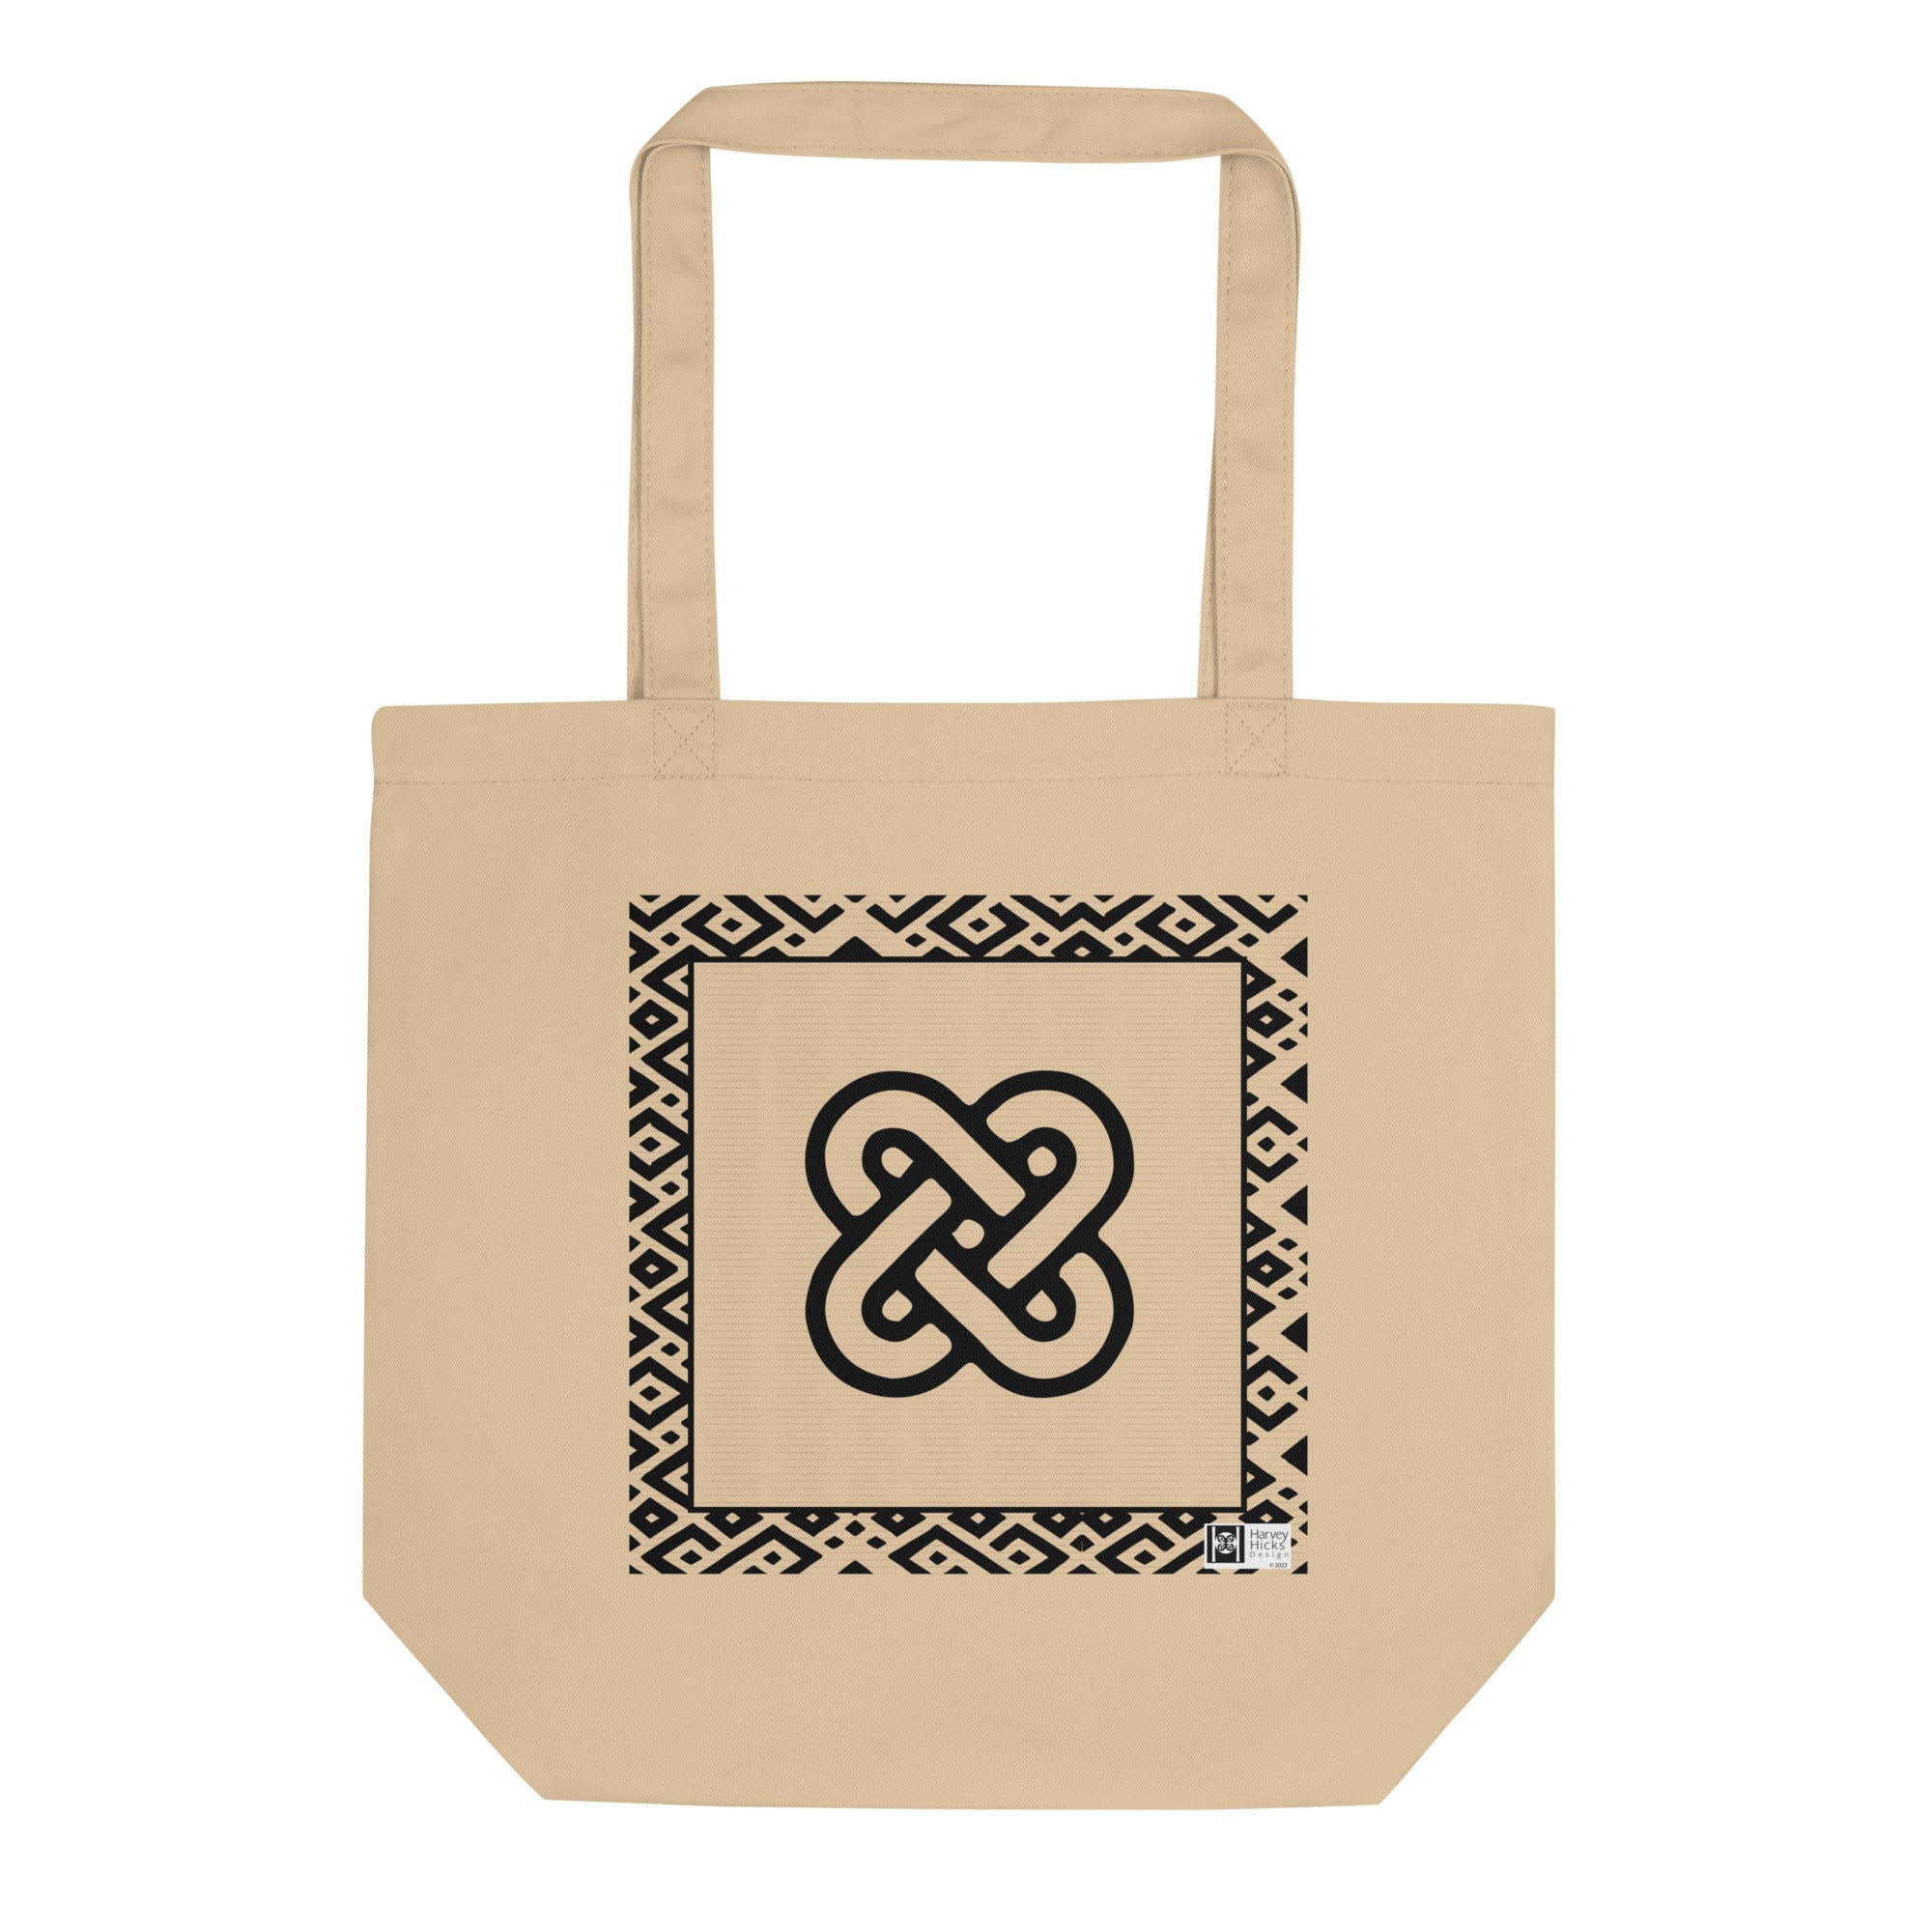 100% cotton Eco Tote Bag, featuring the Adinkra symbol for hypocrisy, NO TEXT